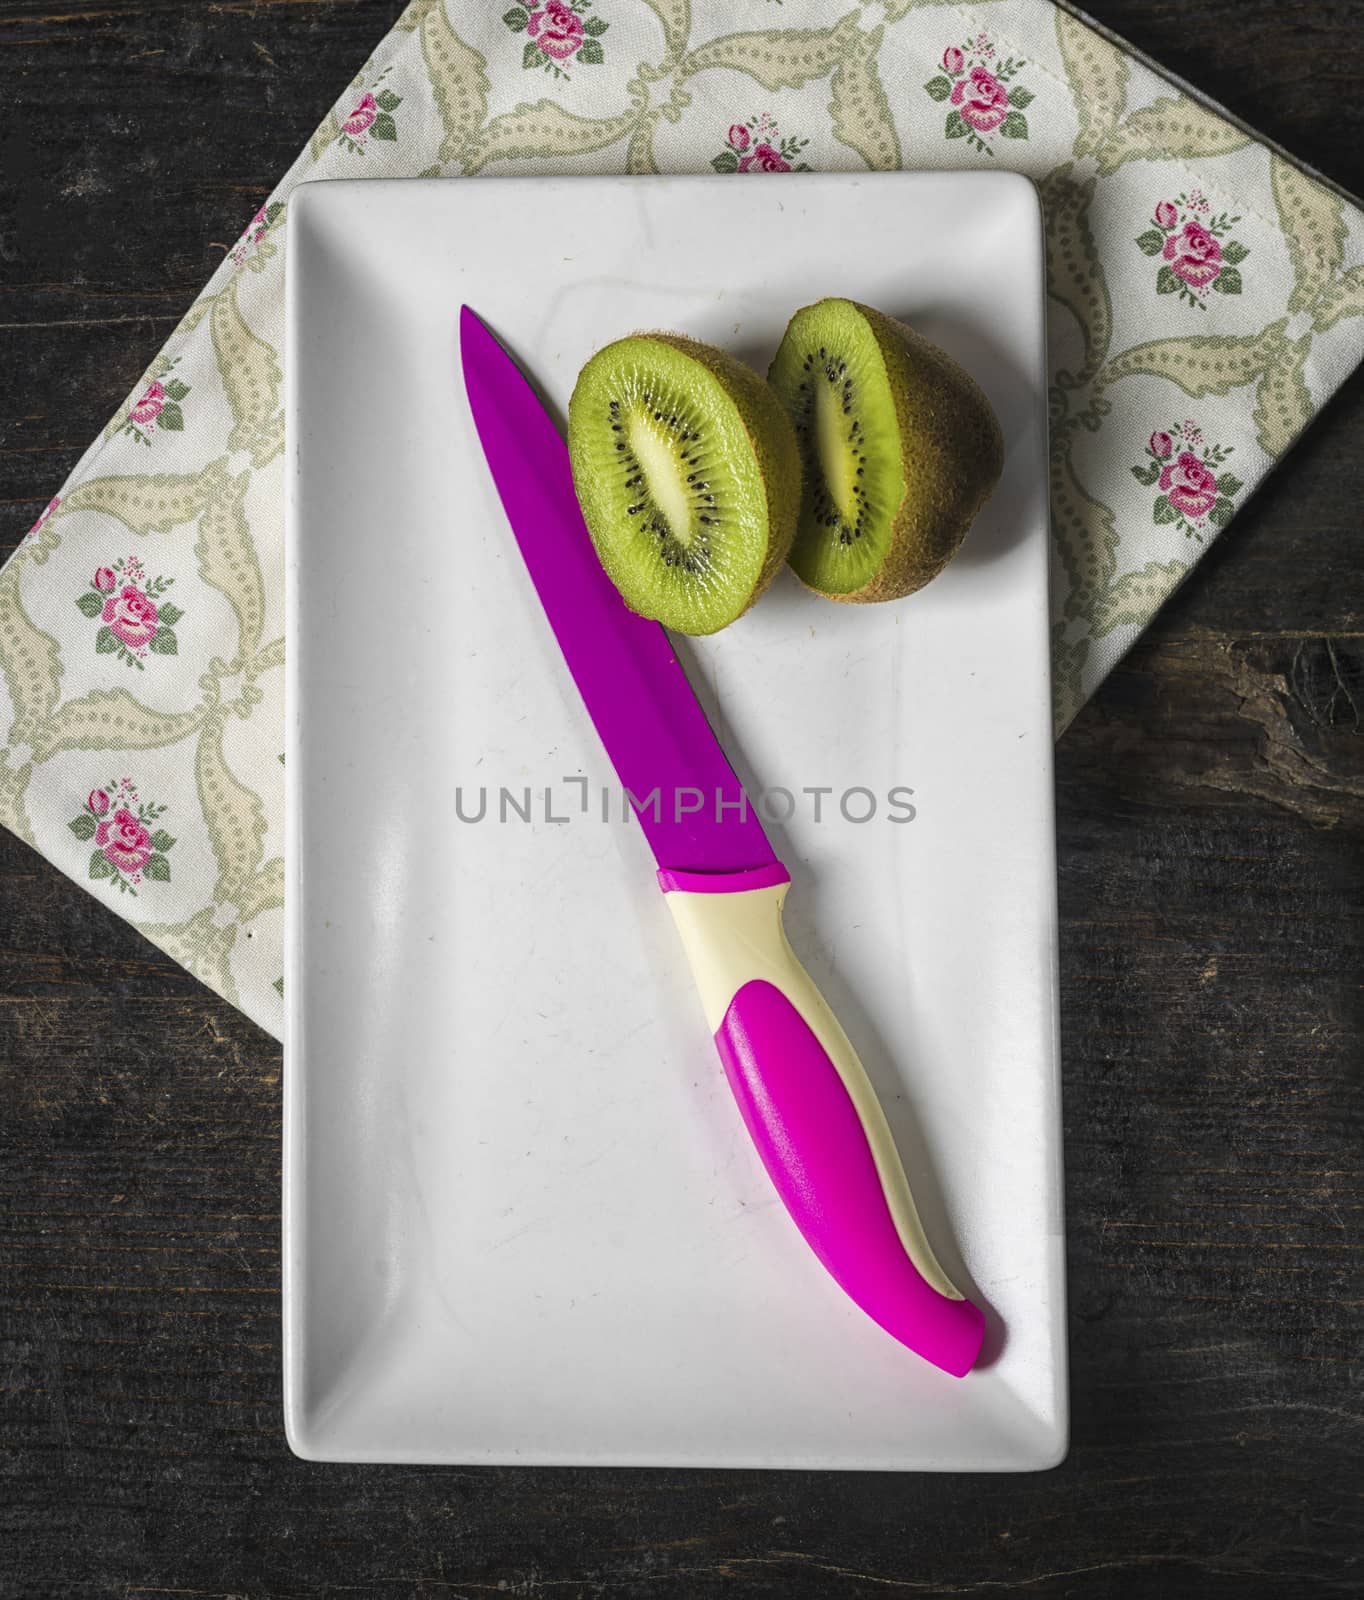 Kiwi Fruit and fuchsia knife, close up by verbano